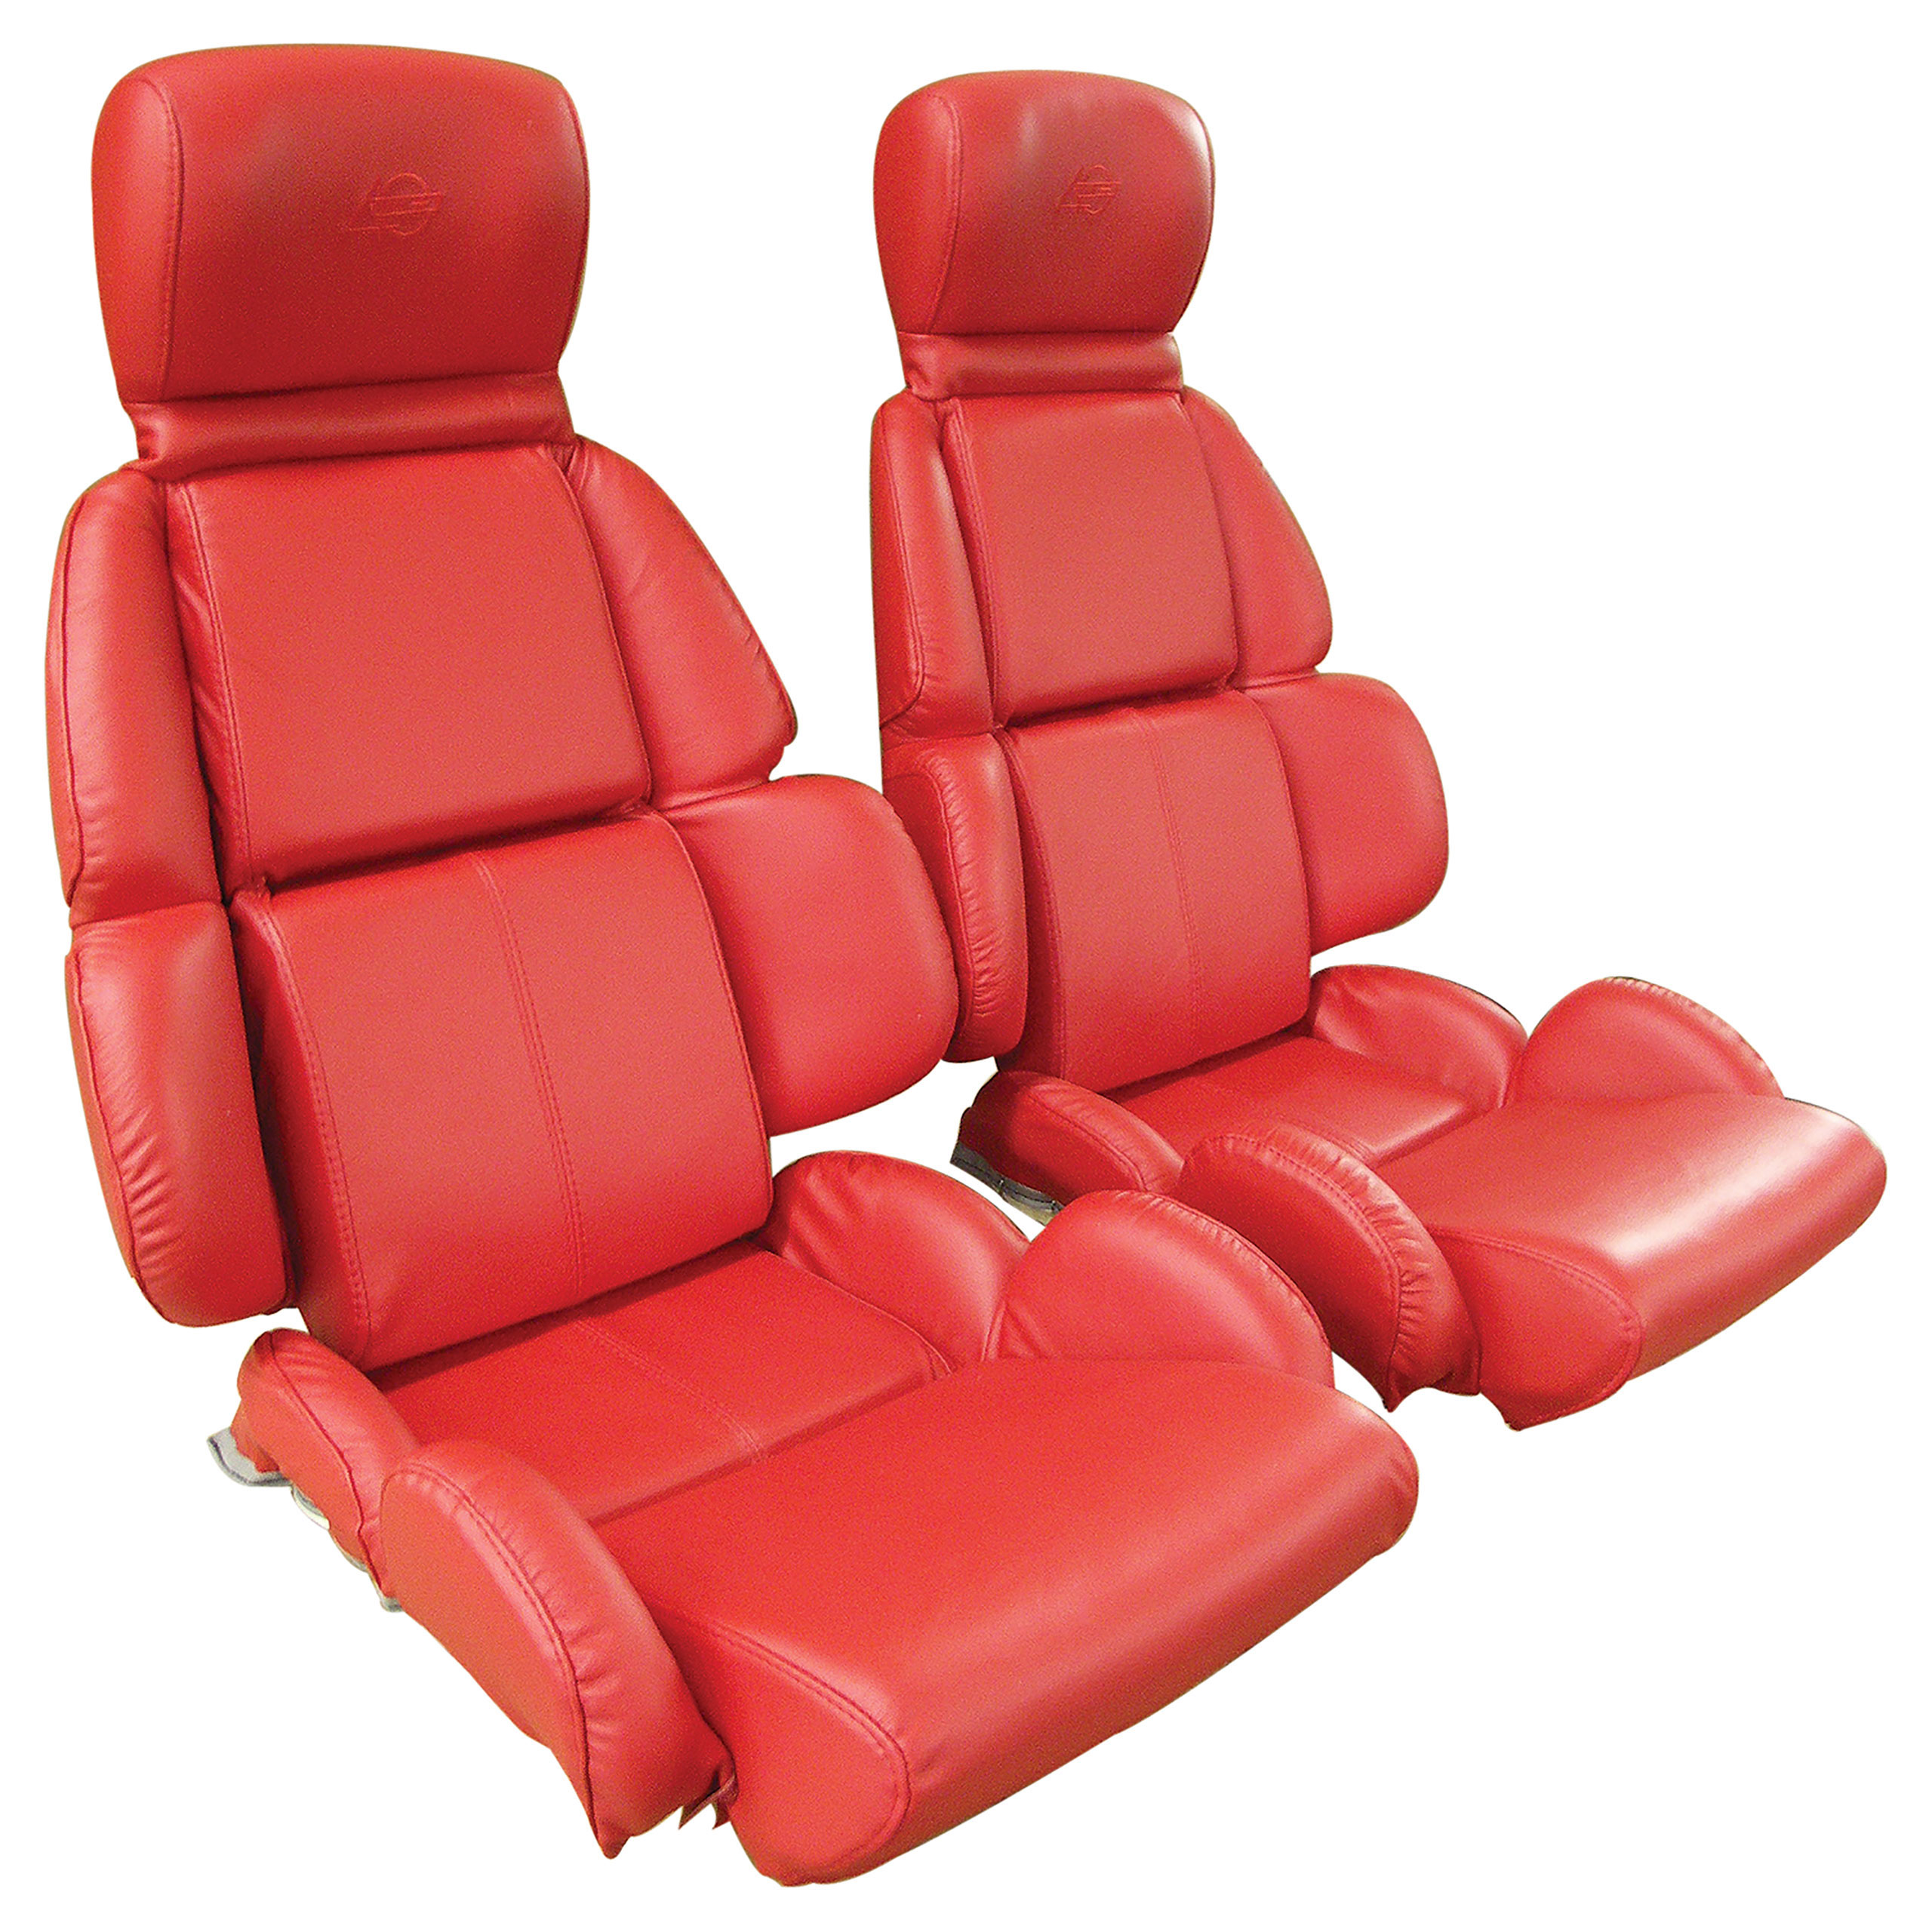 1993 Corvette C4 "Leather-Like" Vinyl Seat Covers Red Standard CA-448885